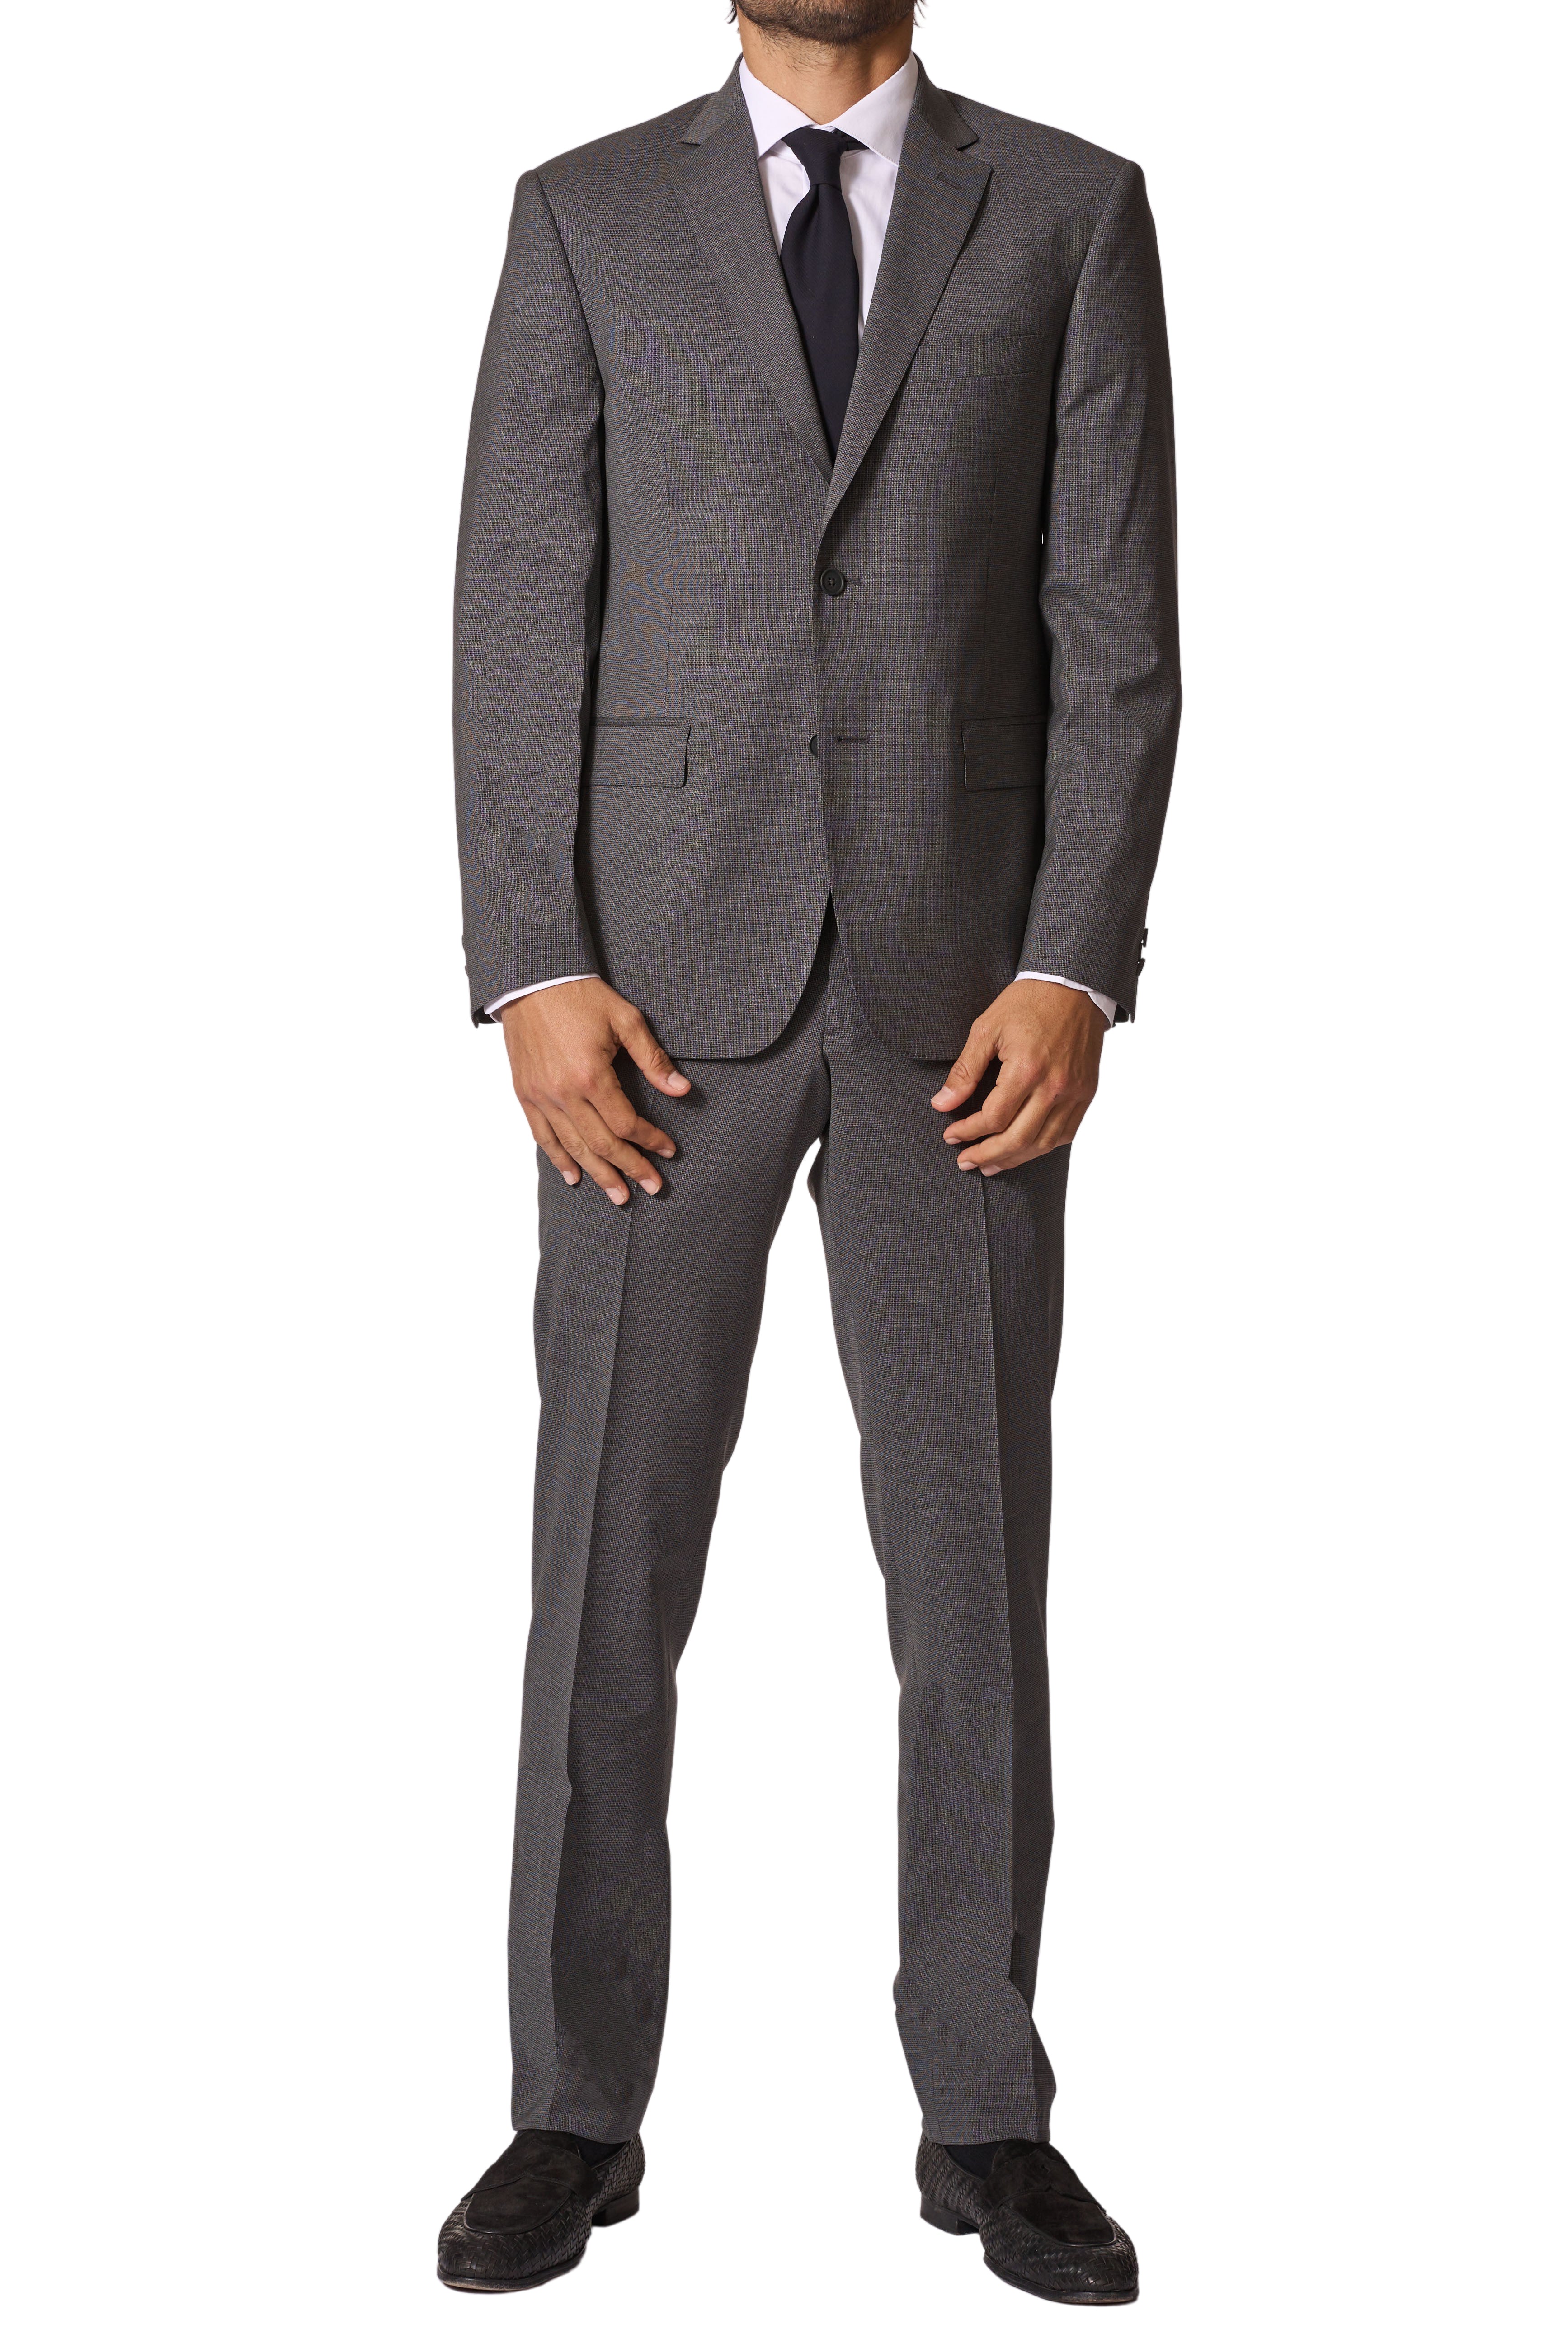 Gibson Bluish Grey Nailhead Suit - Hangrr